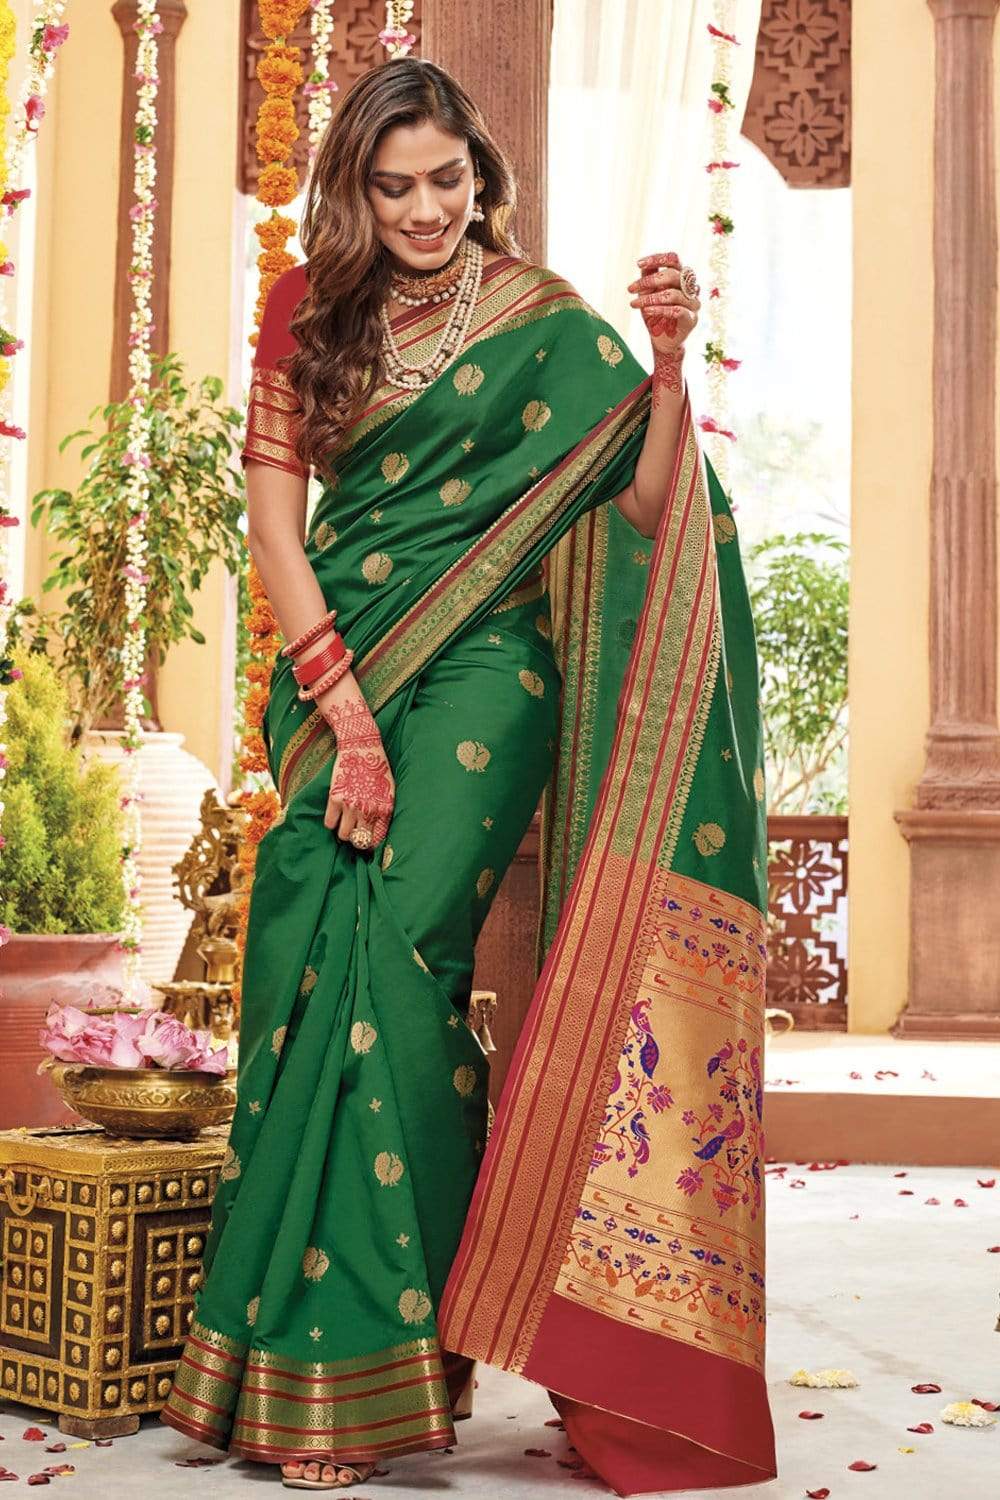 Aggregate more than 78 green pattu sarees for wedding